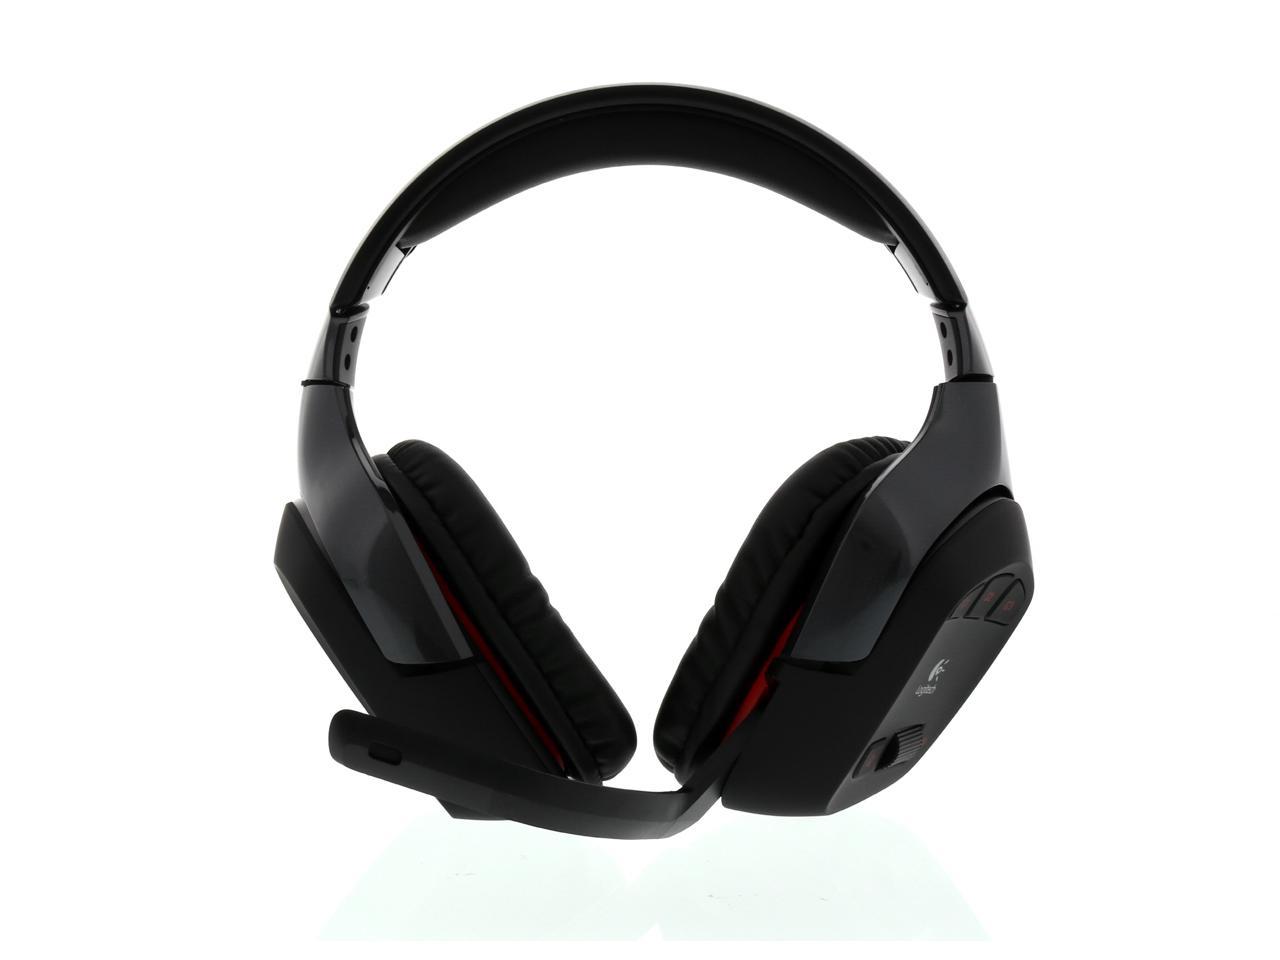 Logitech Gaming Headset G930 7.1 Wireless Headphones Newegg.com